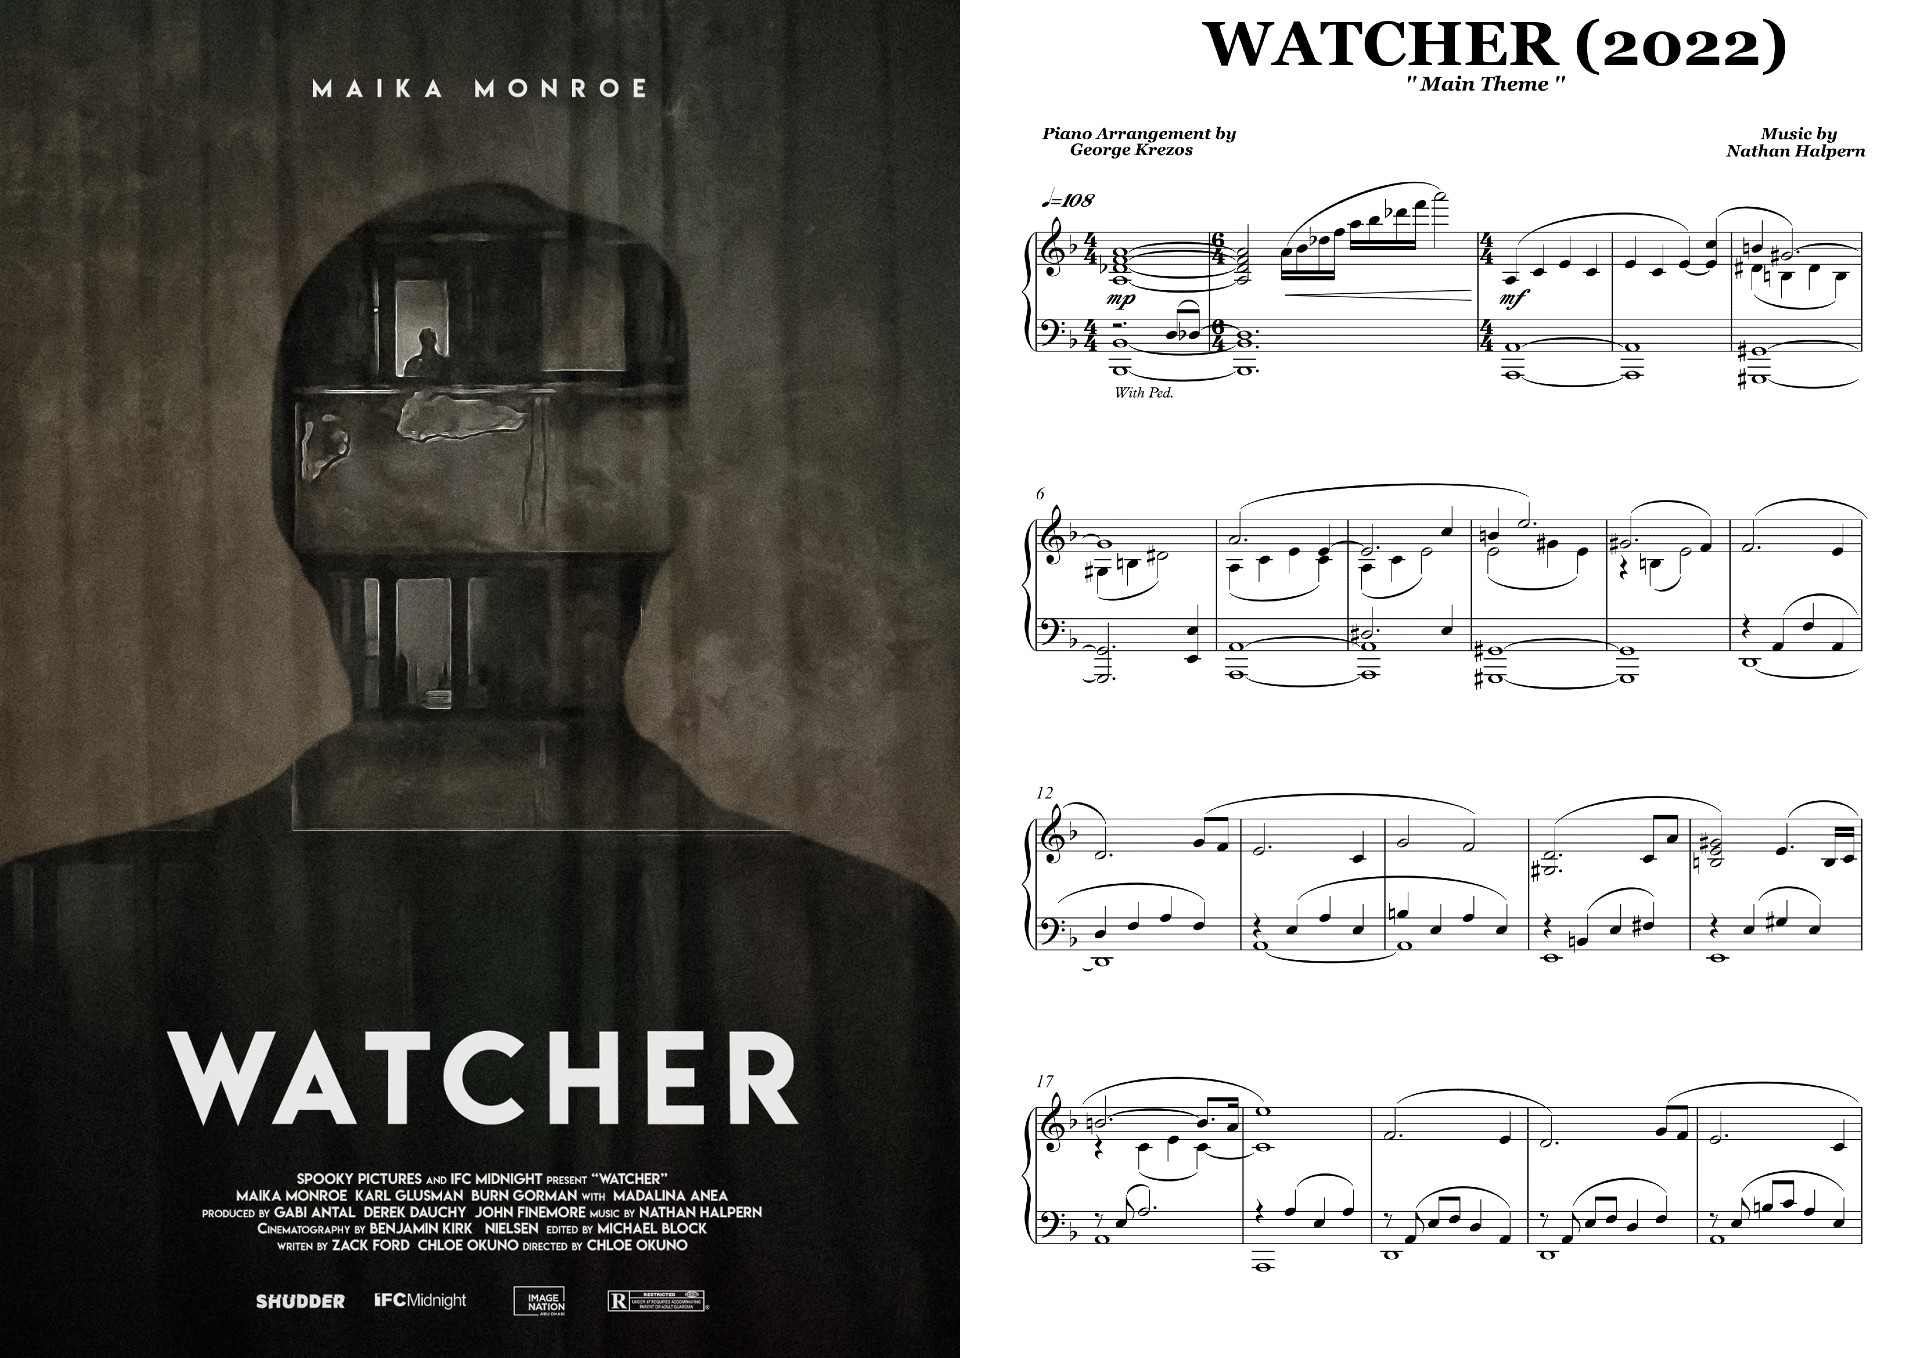 WATCHER - Main Theme.jpg